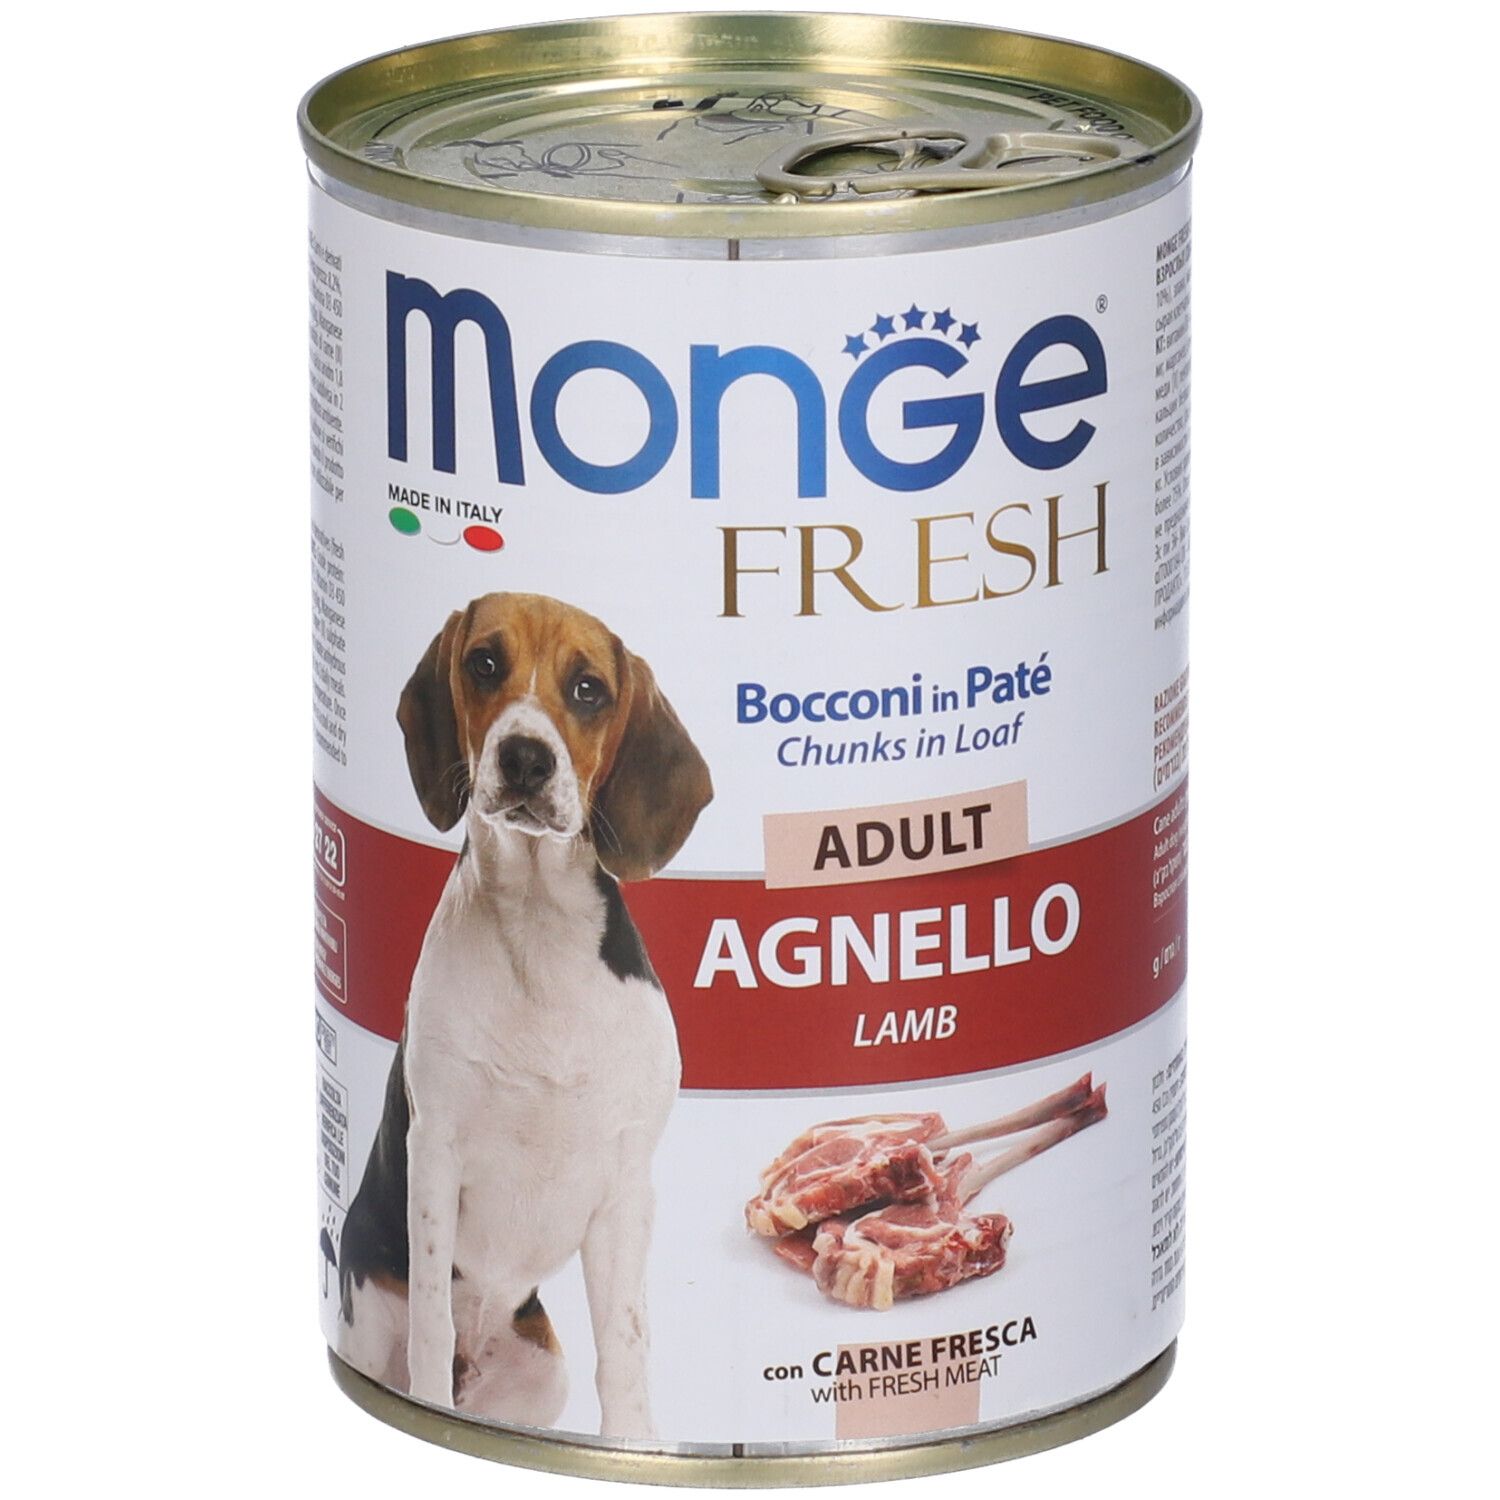 Image of Monge Fresh Adult Agnello Bocconi In Paté